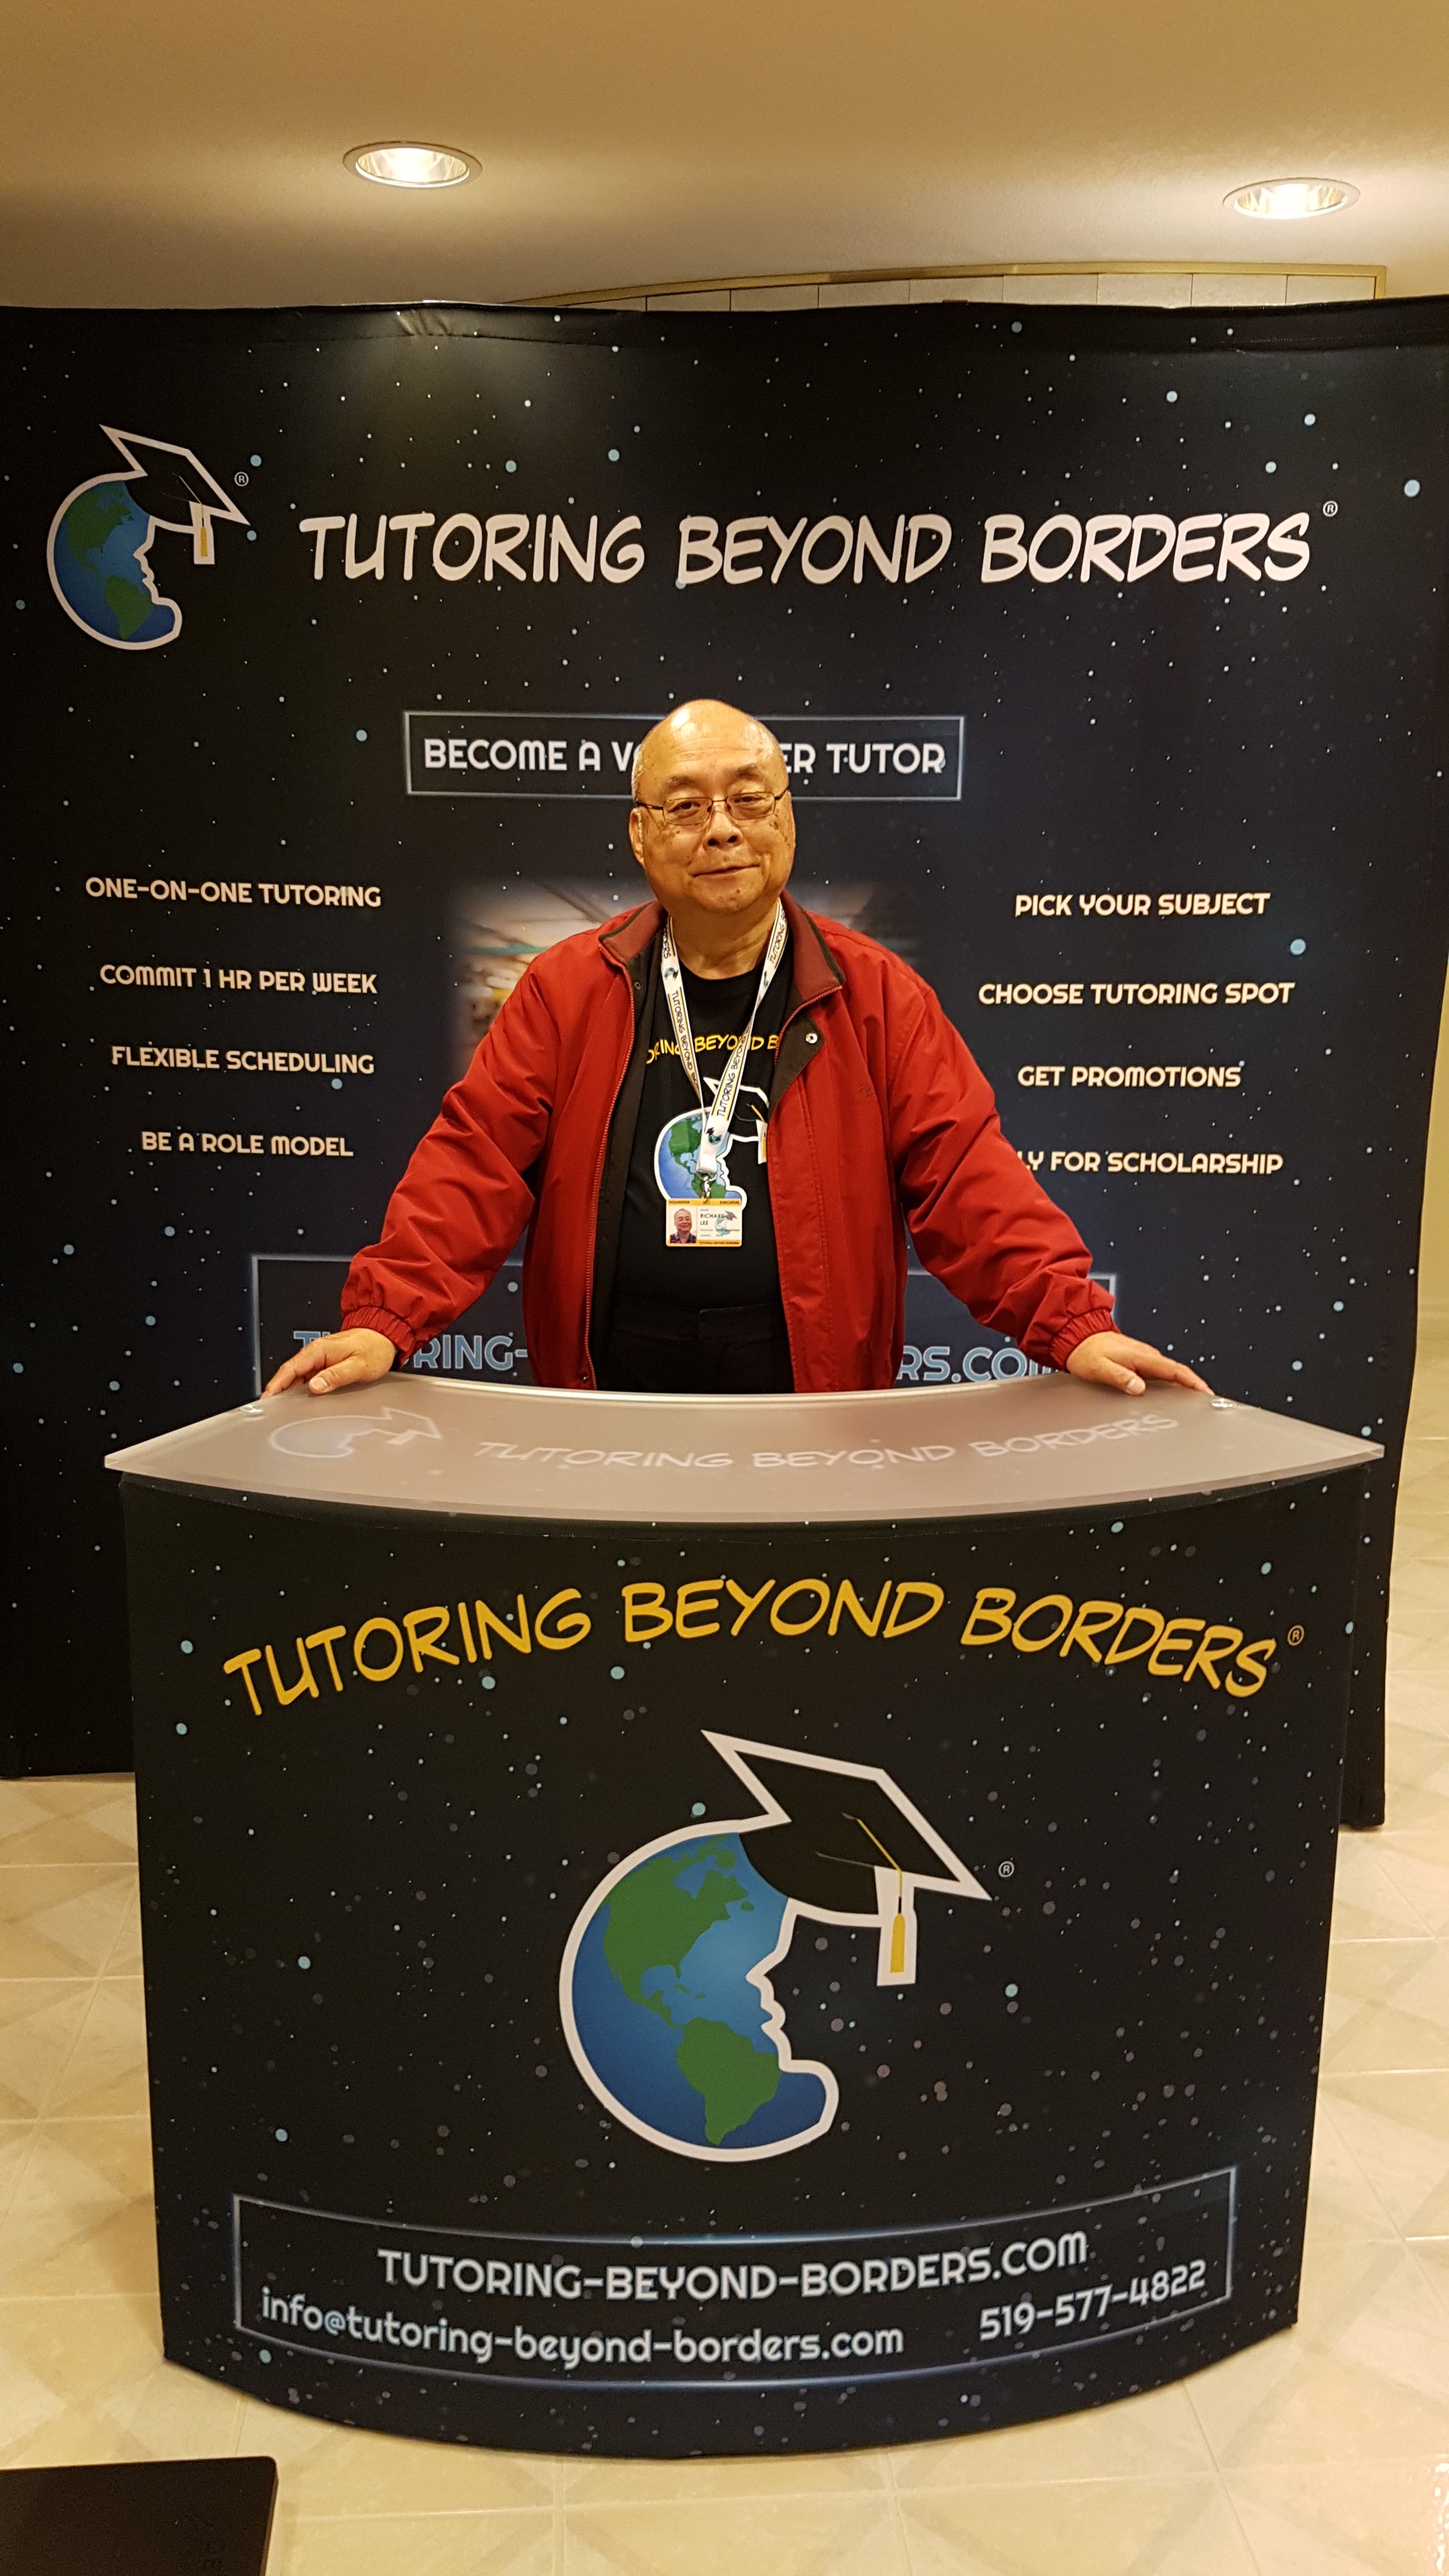 Richard Lee at Tutoring Beyond Borders booth.